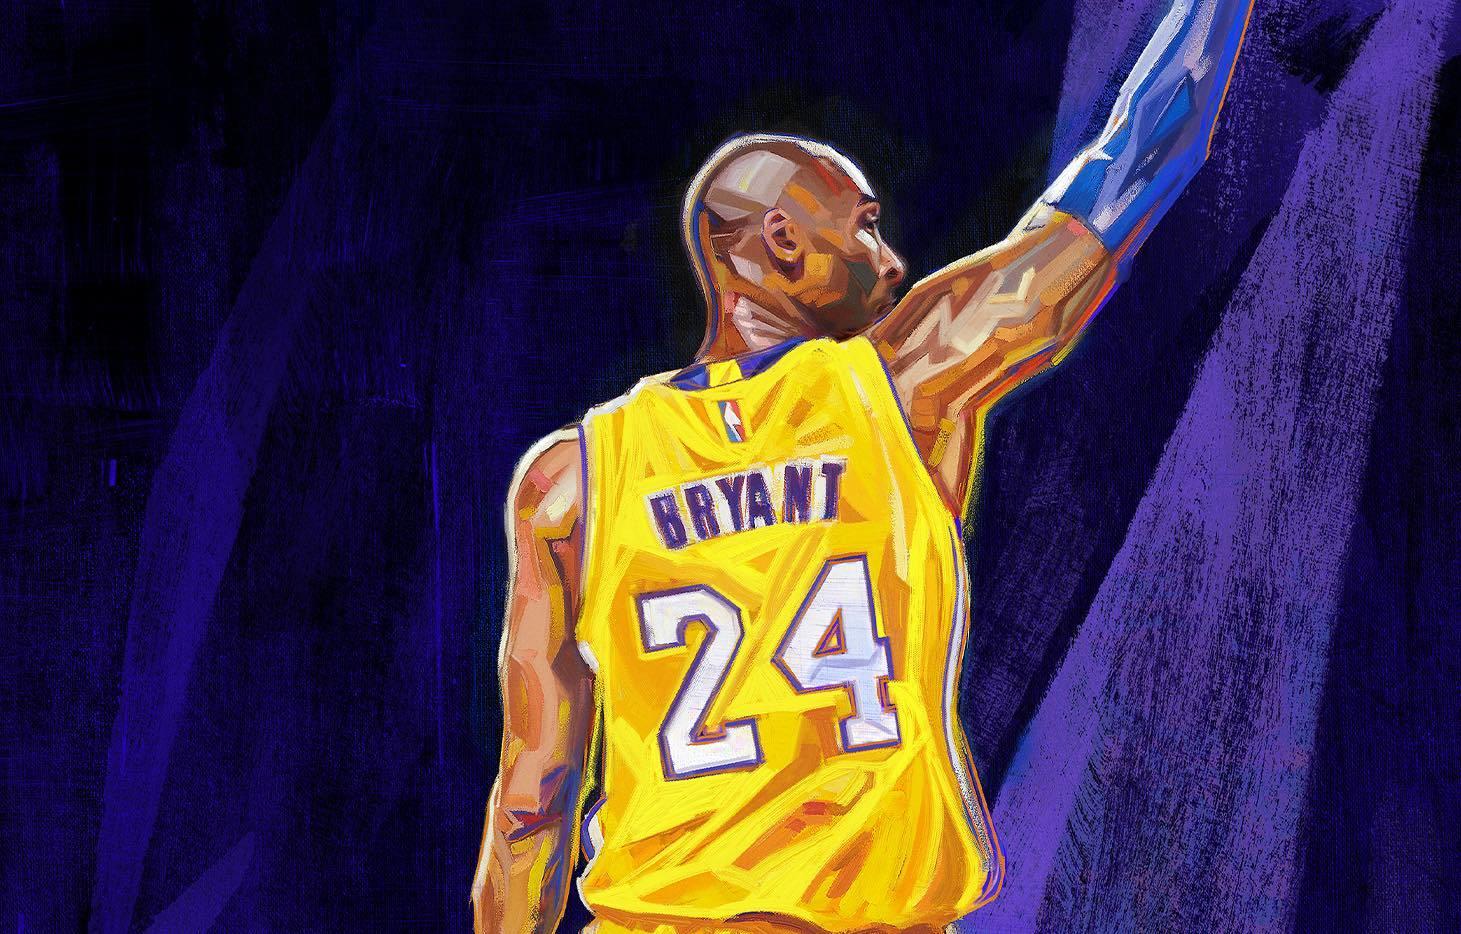 Nba 2k21 Honors Kobe Bryant With Mamba Forever Edition Gamespot